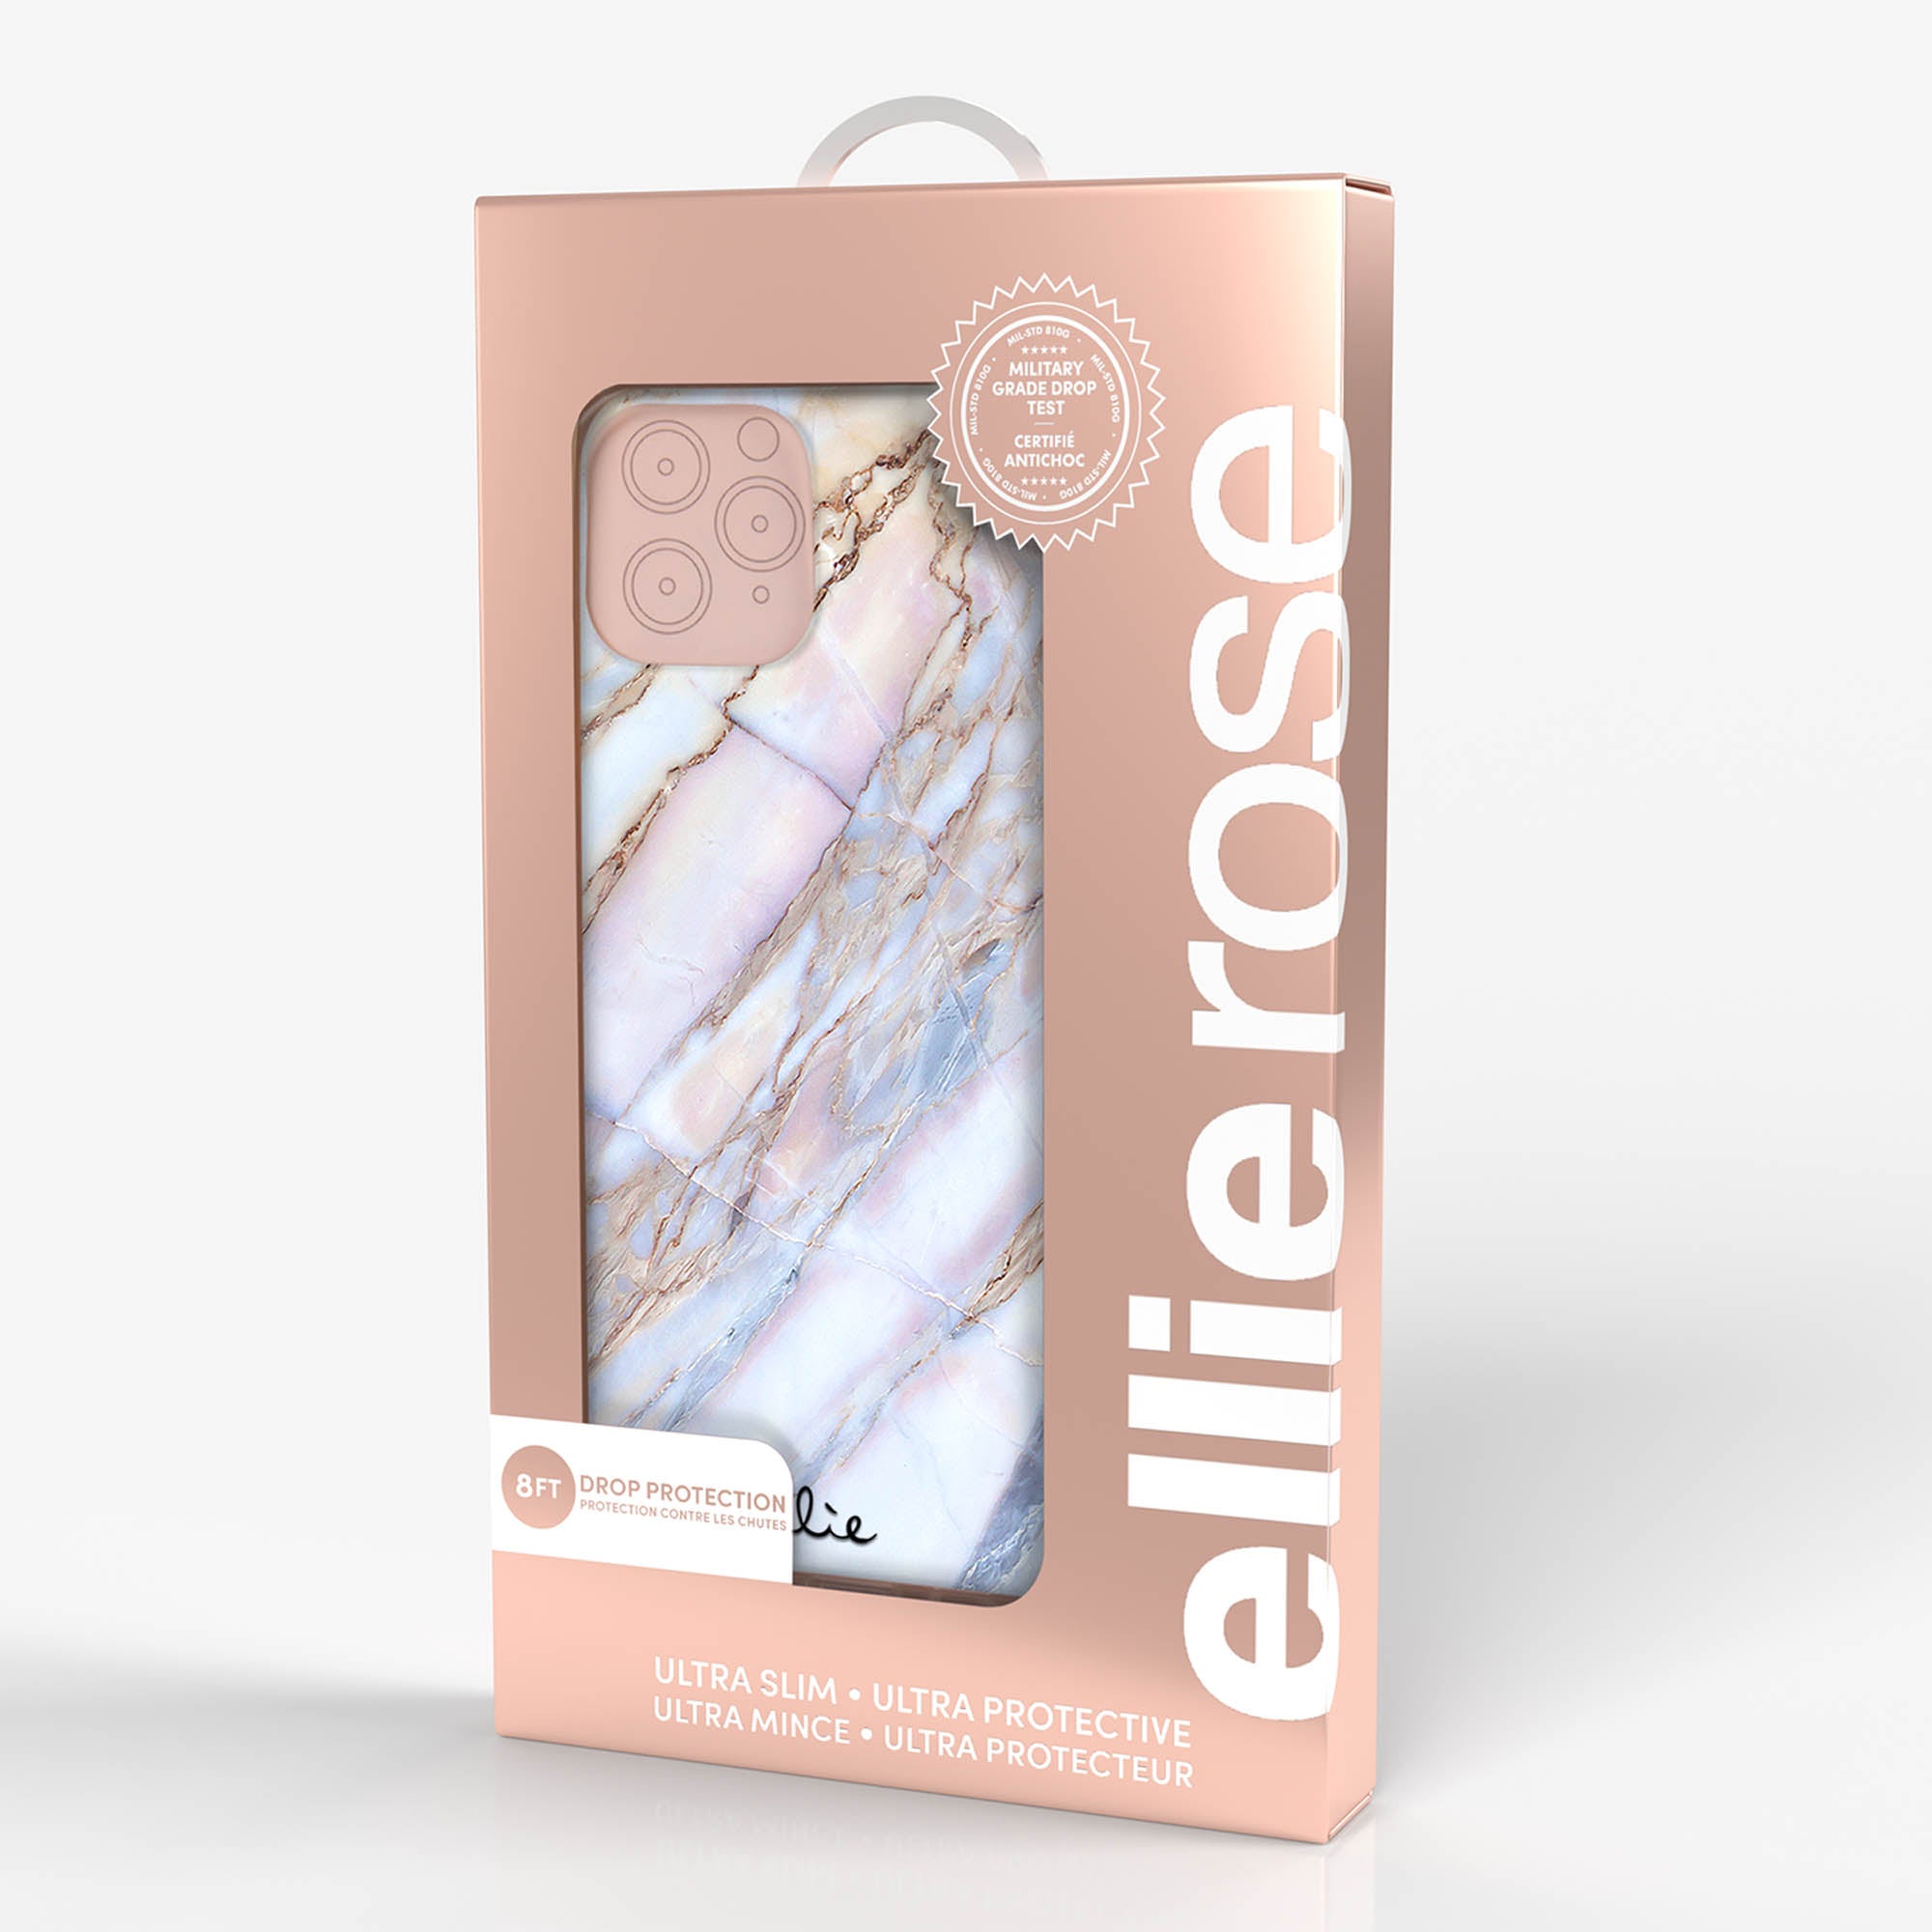 Ellielosangeles Desert Marble IPhone Case - IPhone 11 Pro Max/Xs Max